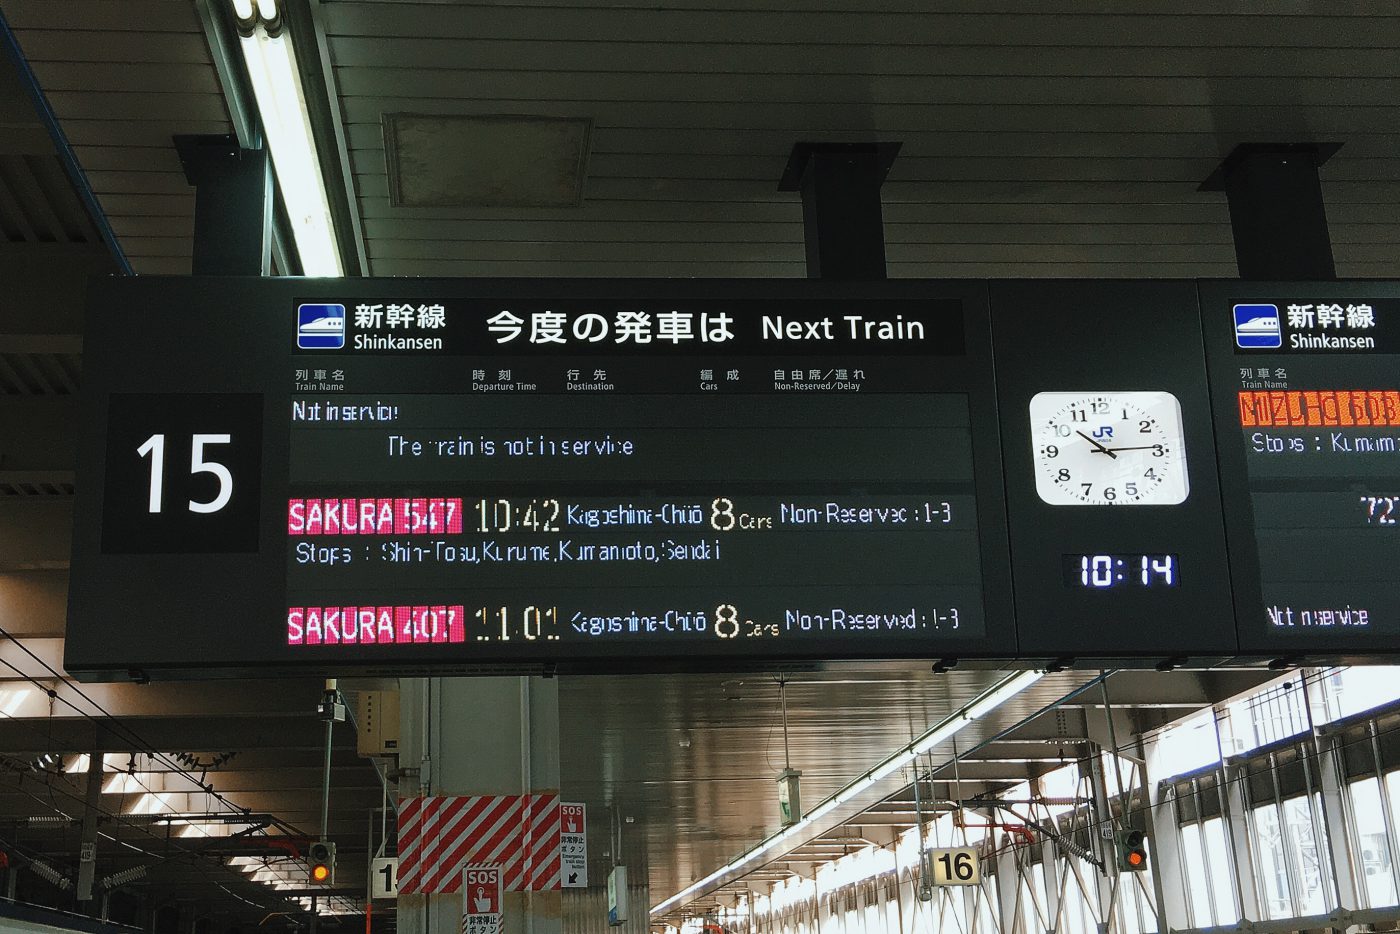 Train information signboard